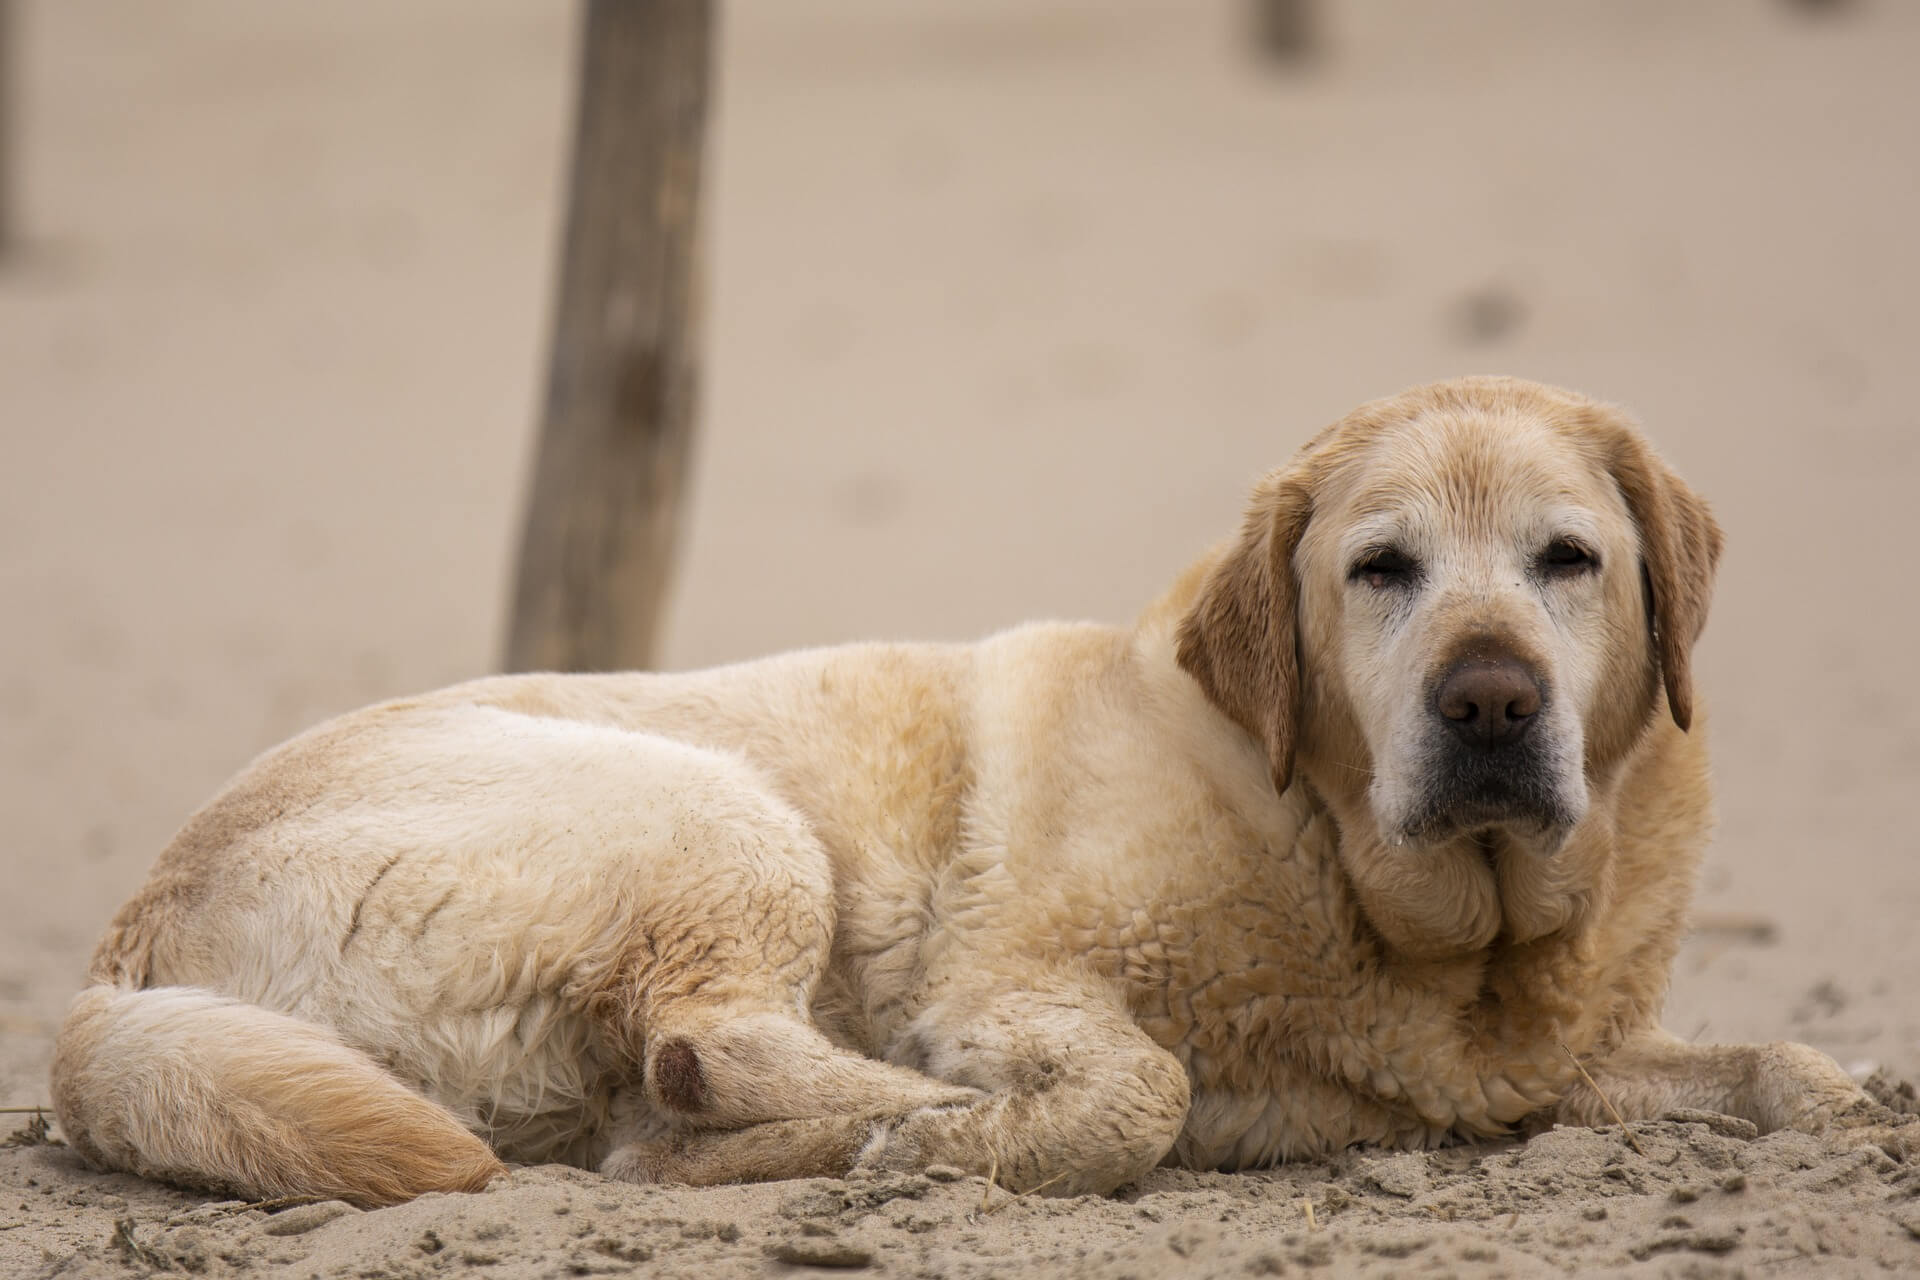 A dog on the sand.